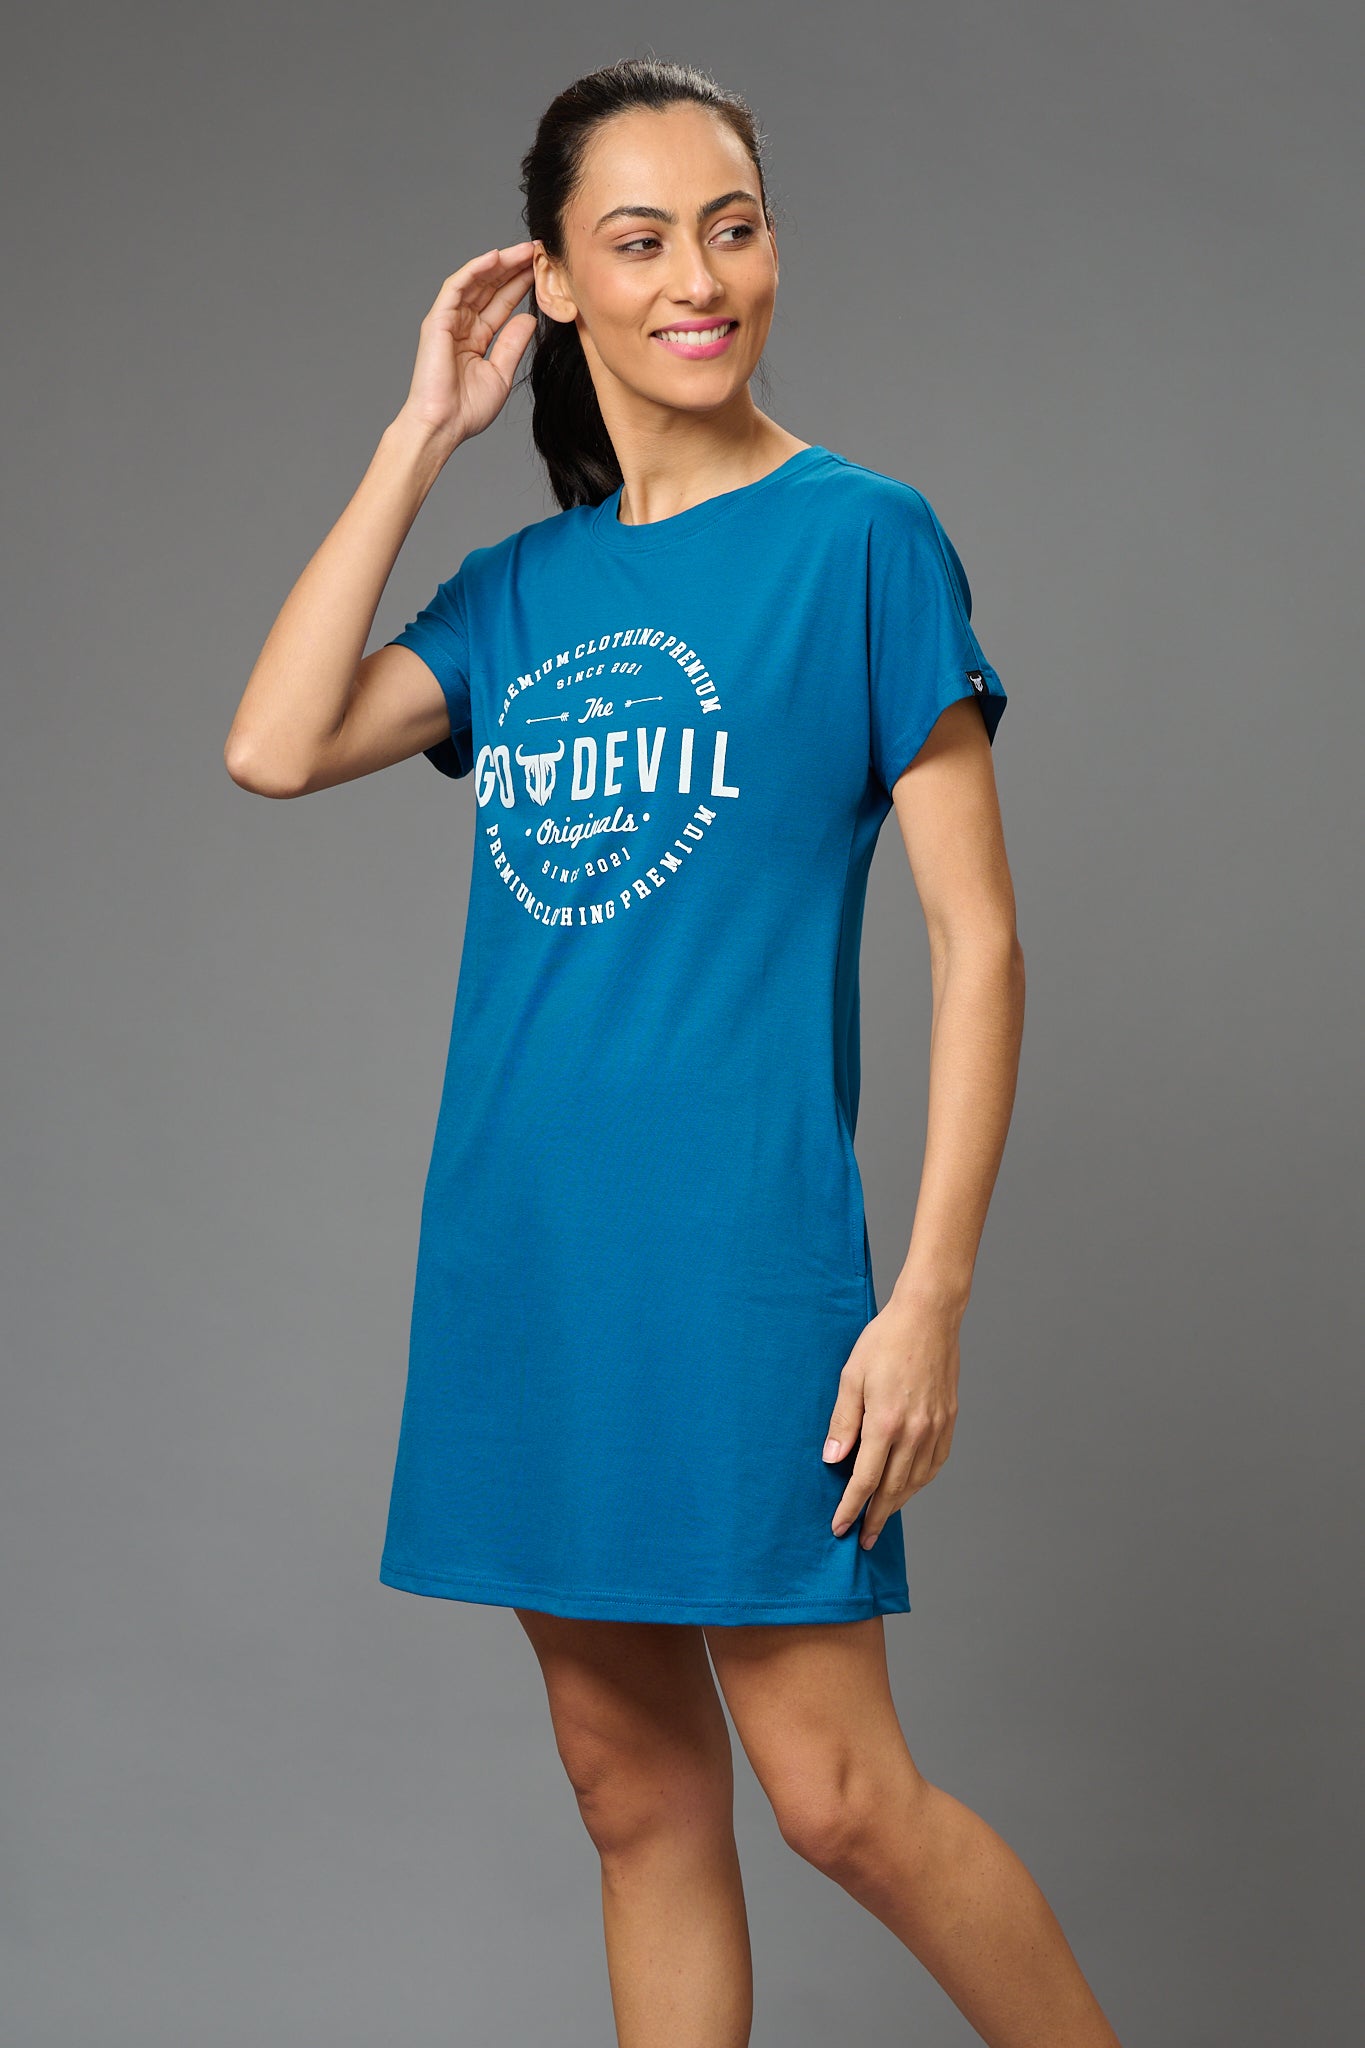 Go Devil Stamp Printed Royal Blue Dress for Women - Go Devil